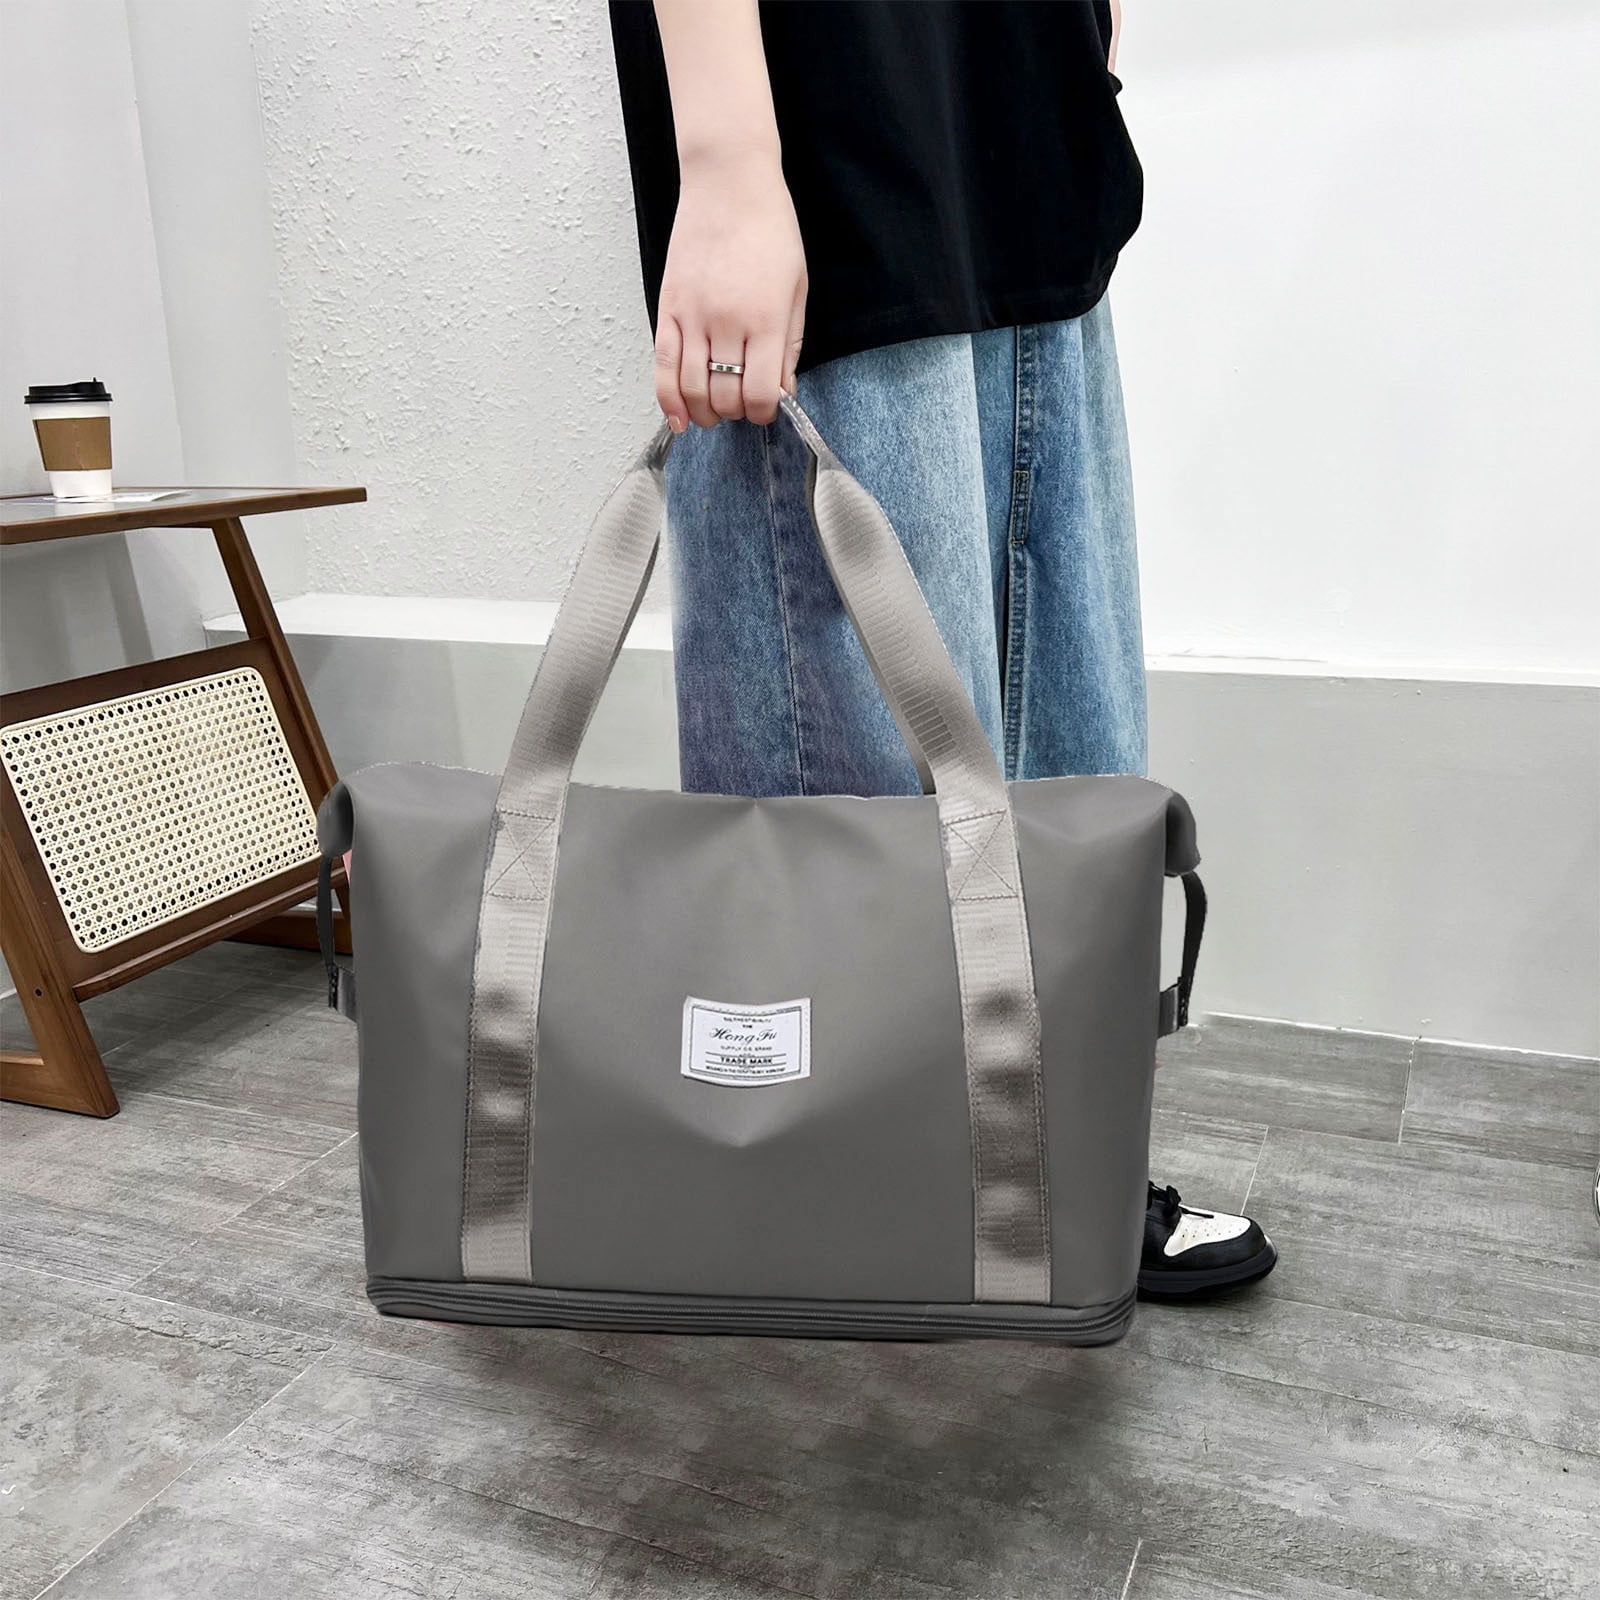 VerPetridure Travel Bag Sport Tote Gym Bag for Women,Foldable Travel Duffel  Bag Shoulder Weekender Overnight Bag for Outdoor Travel Essentials 